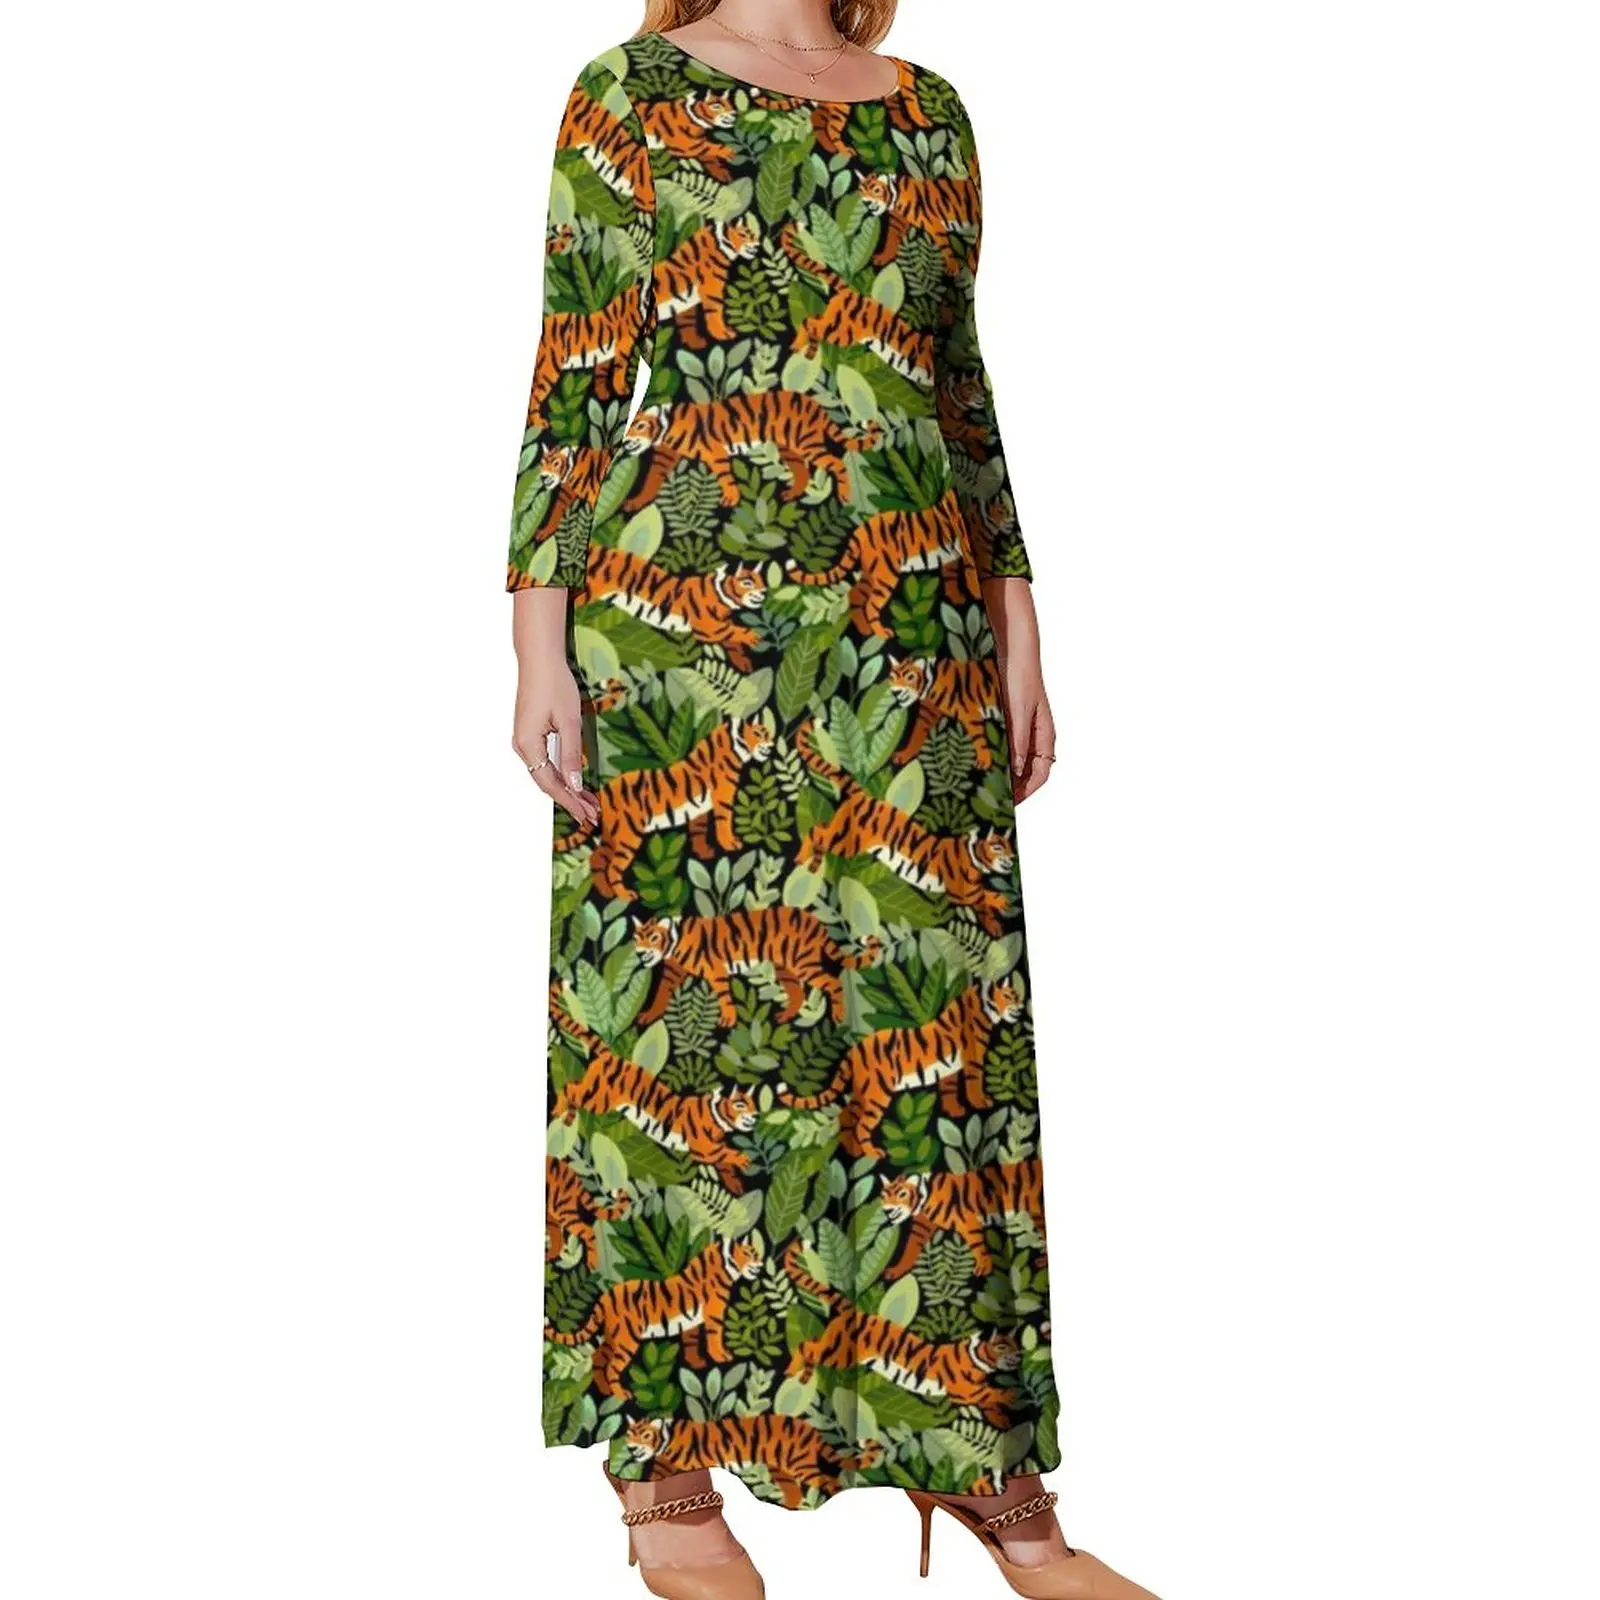 Bengal Tiger Print Dress Green Jungle Beach Dresses Long Sleeve Street Style Long Maxi Dress Elegant Vestidos Plus Size 5XL